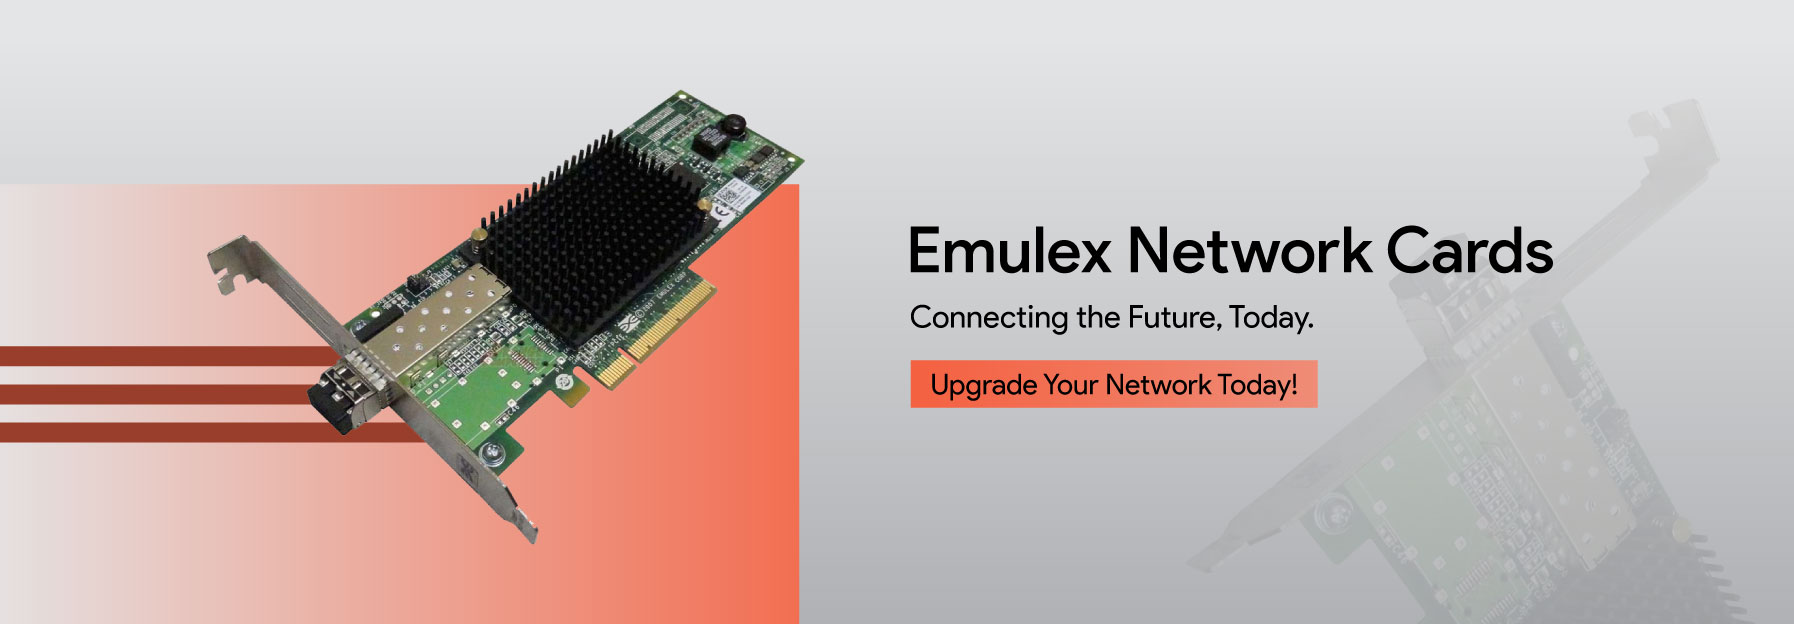 emulex network cards